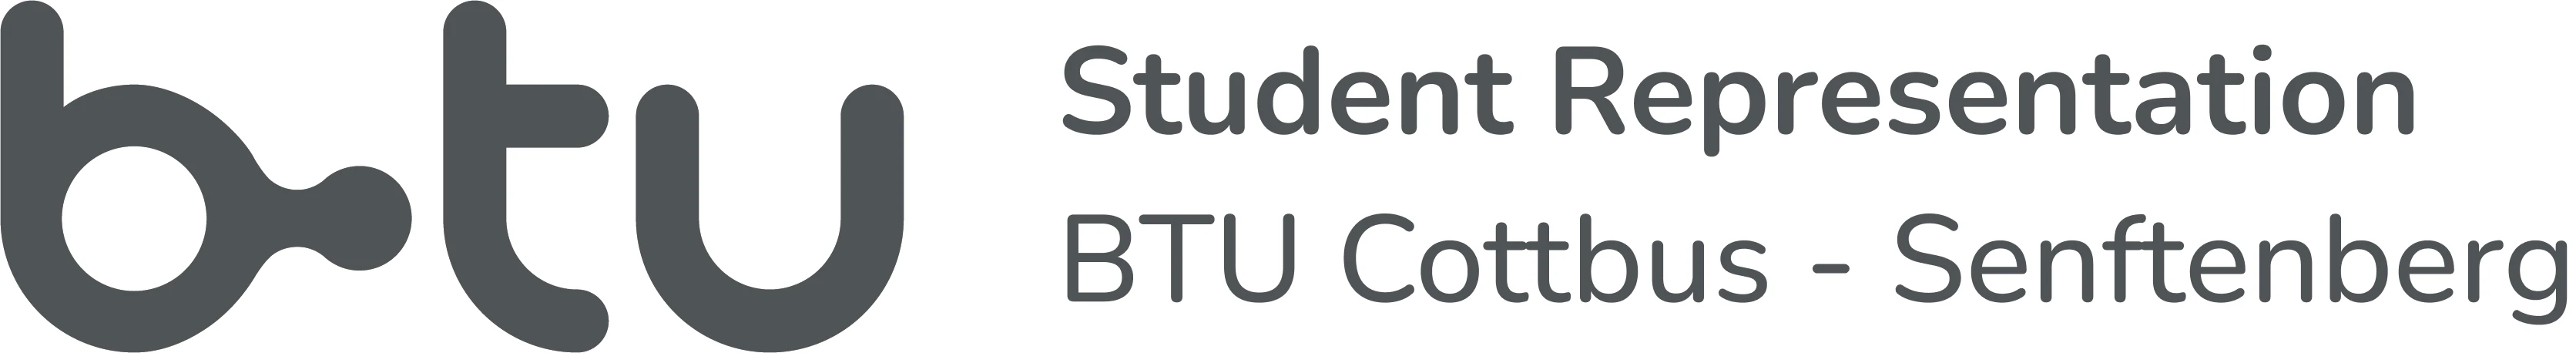 Logo of Student Representation of BTU Cottbus-Senftenberg